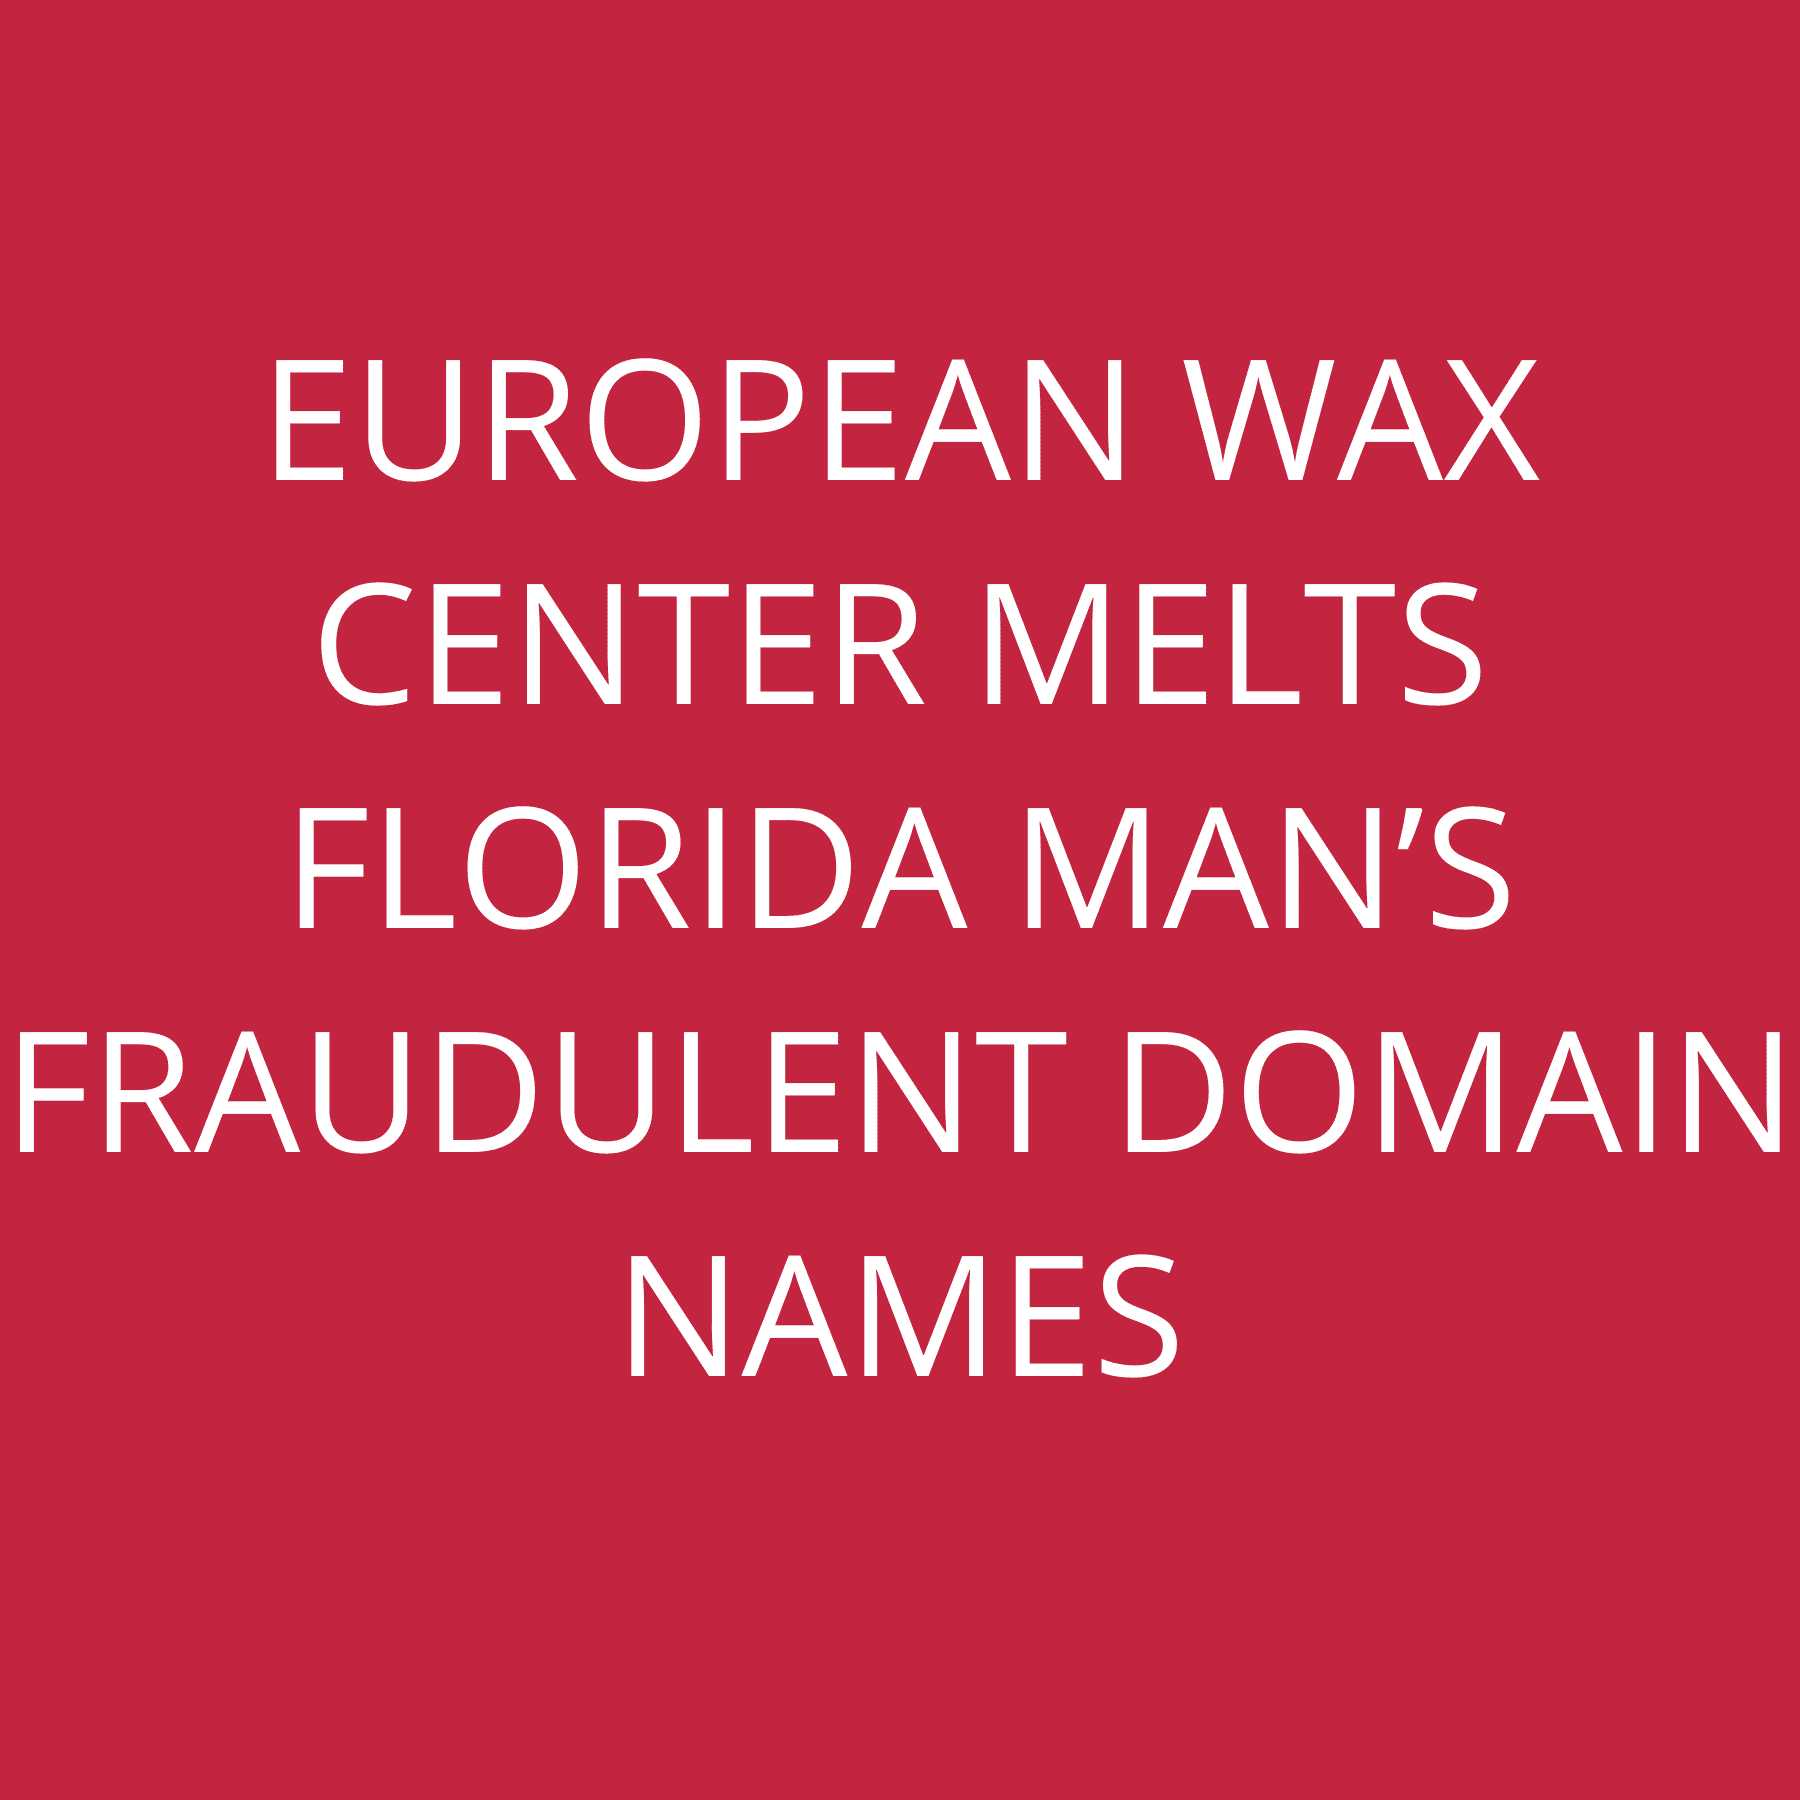 European Wax Center melts Florida Man’s fraudulent domain names